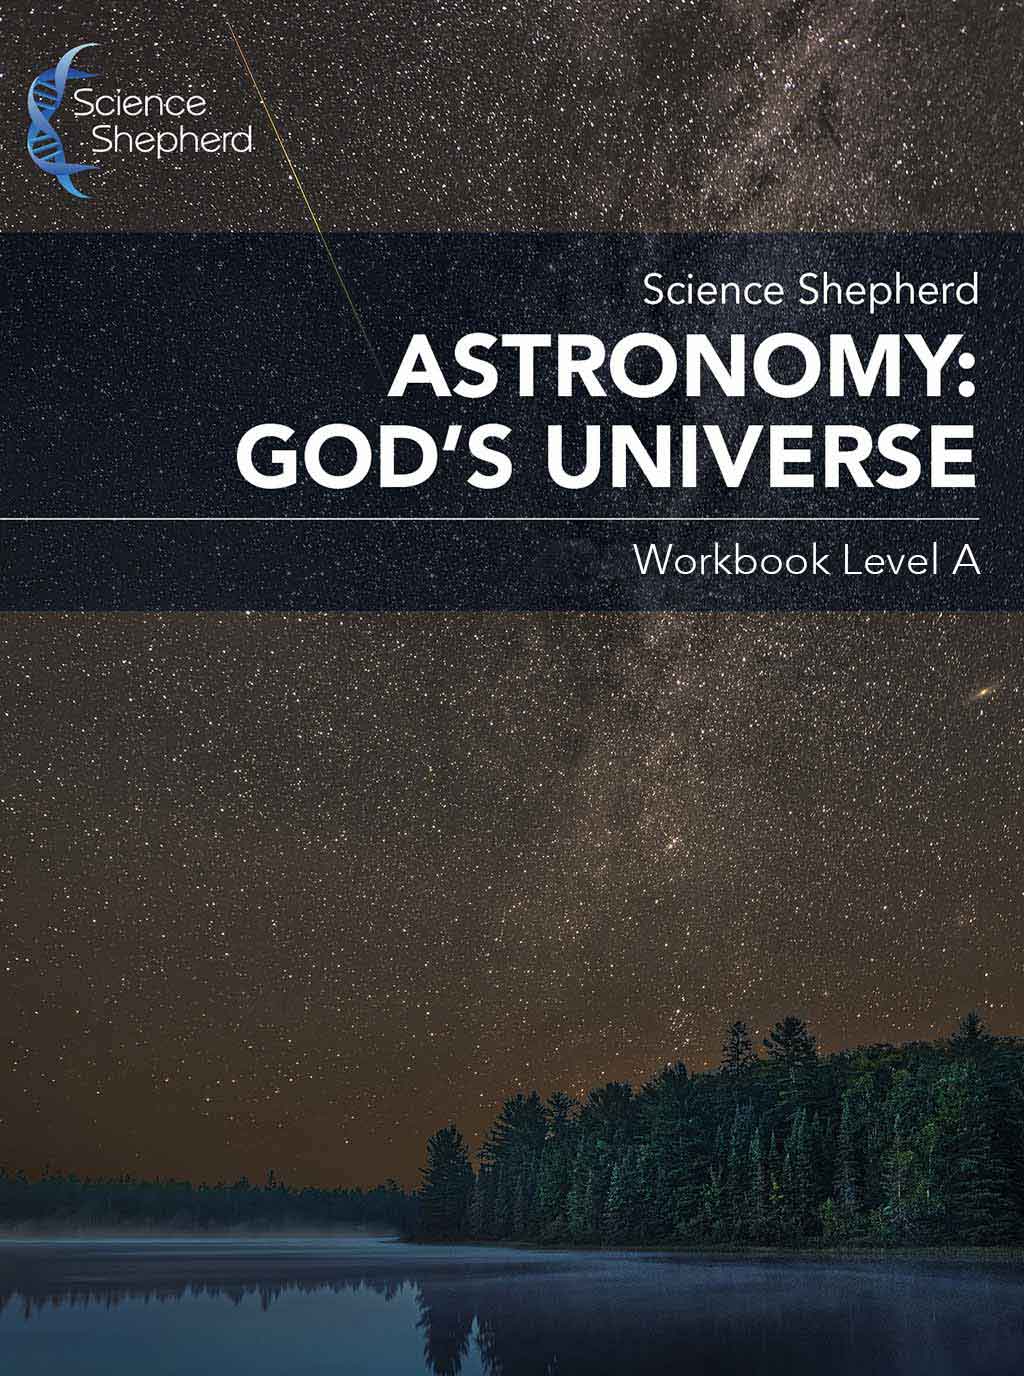 Homeschool astronomy curriculum Workbook Level A cover of a starry sky